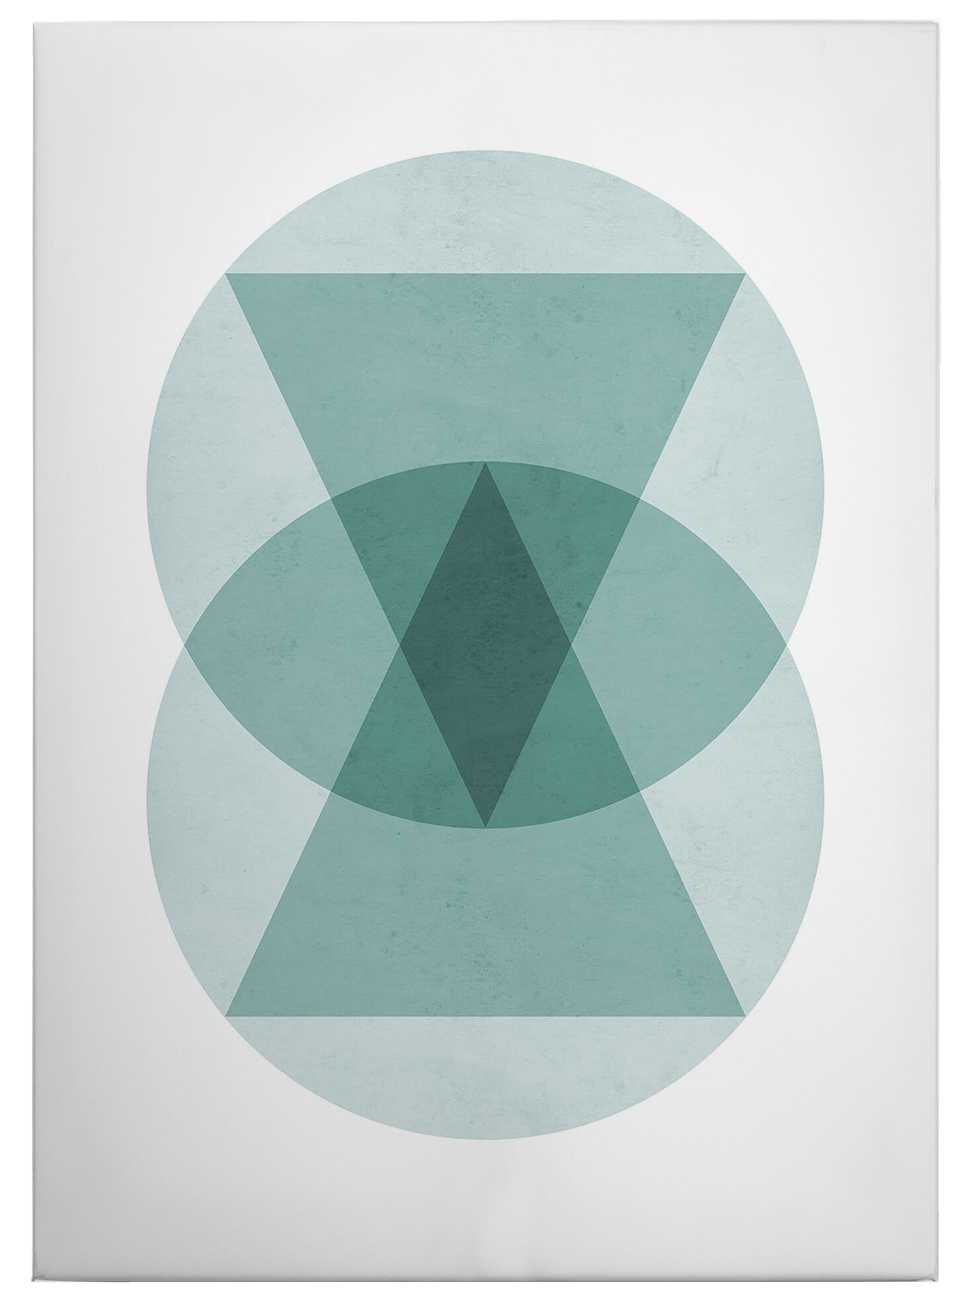             Canvas schilderij geometrisch patroon cirkels driehoeken - 0,50 m x 0,70 m
        